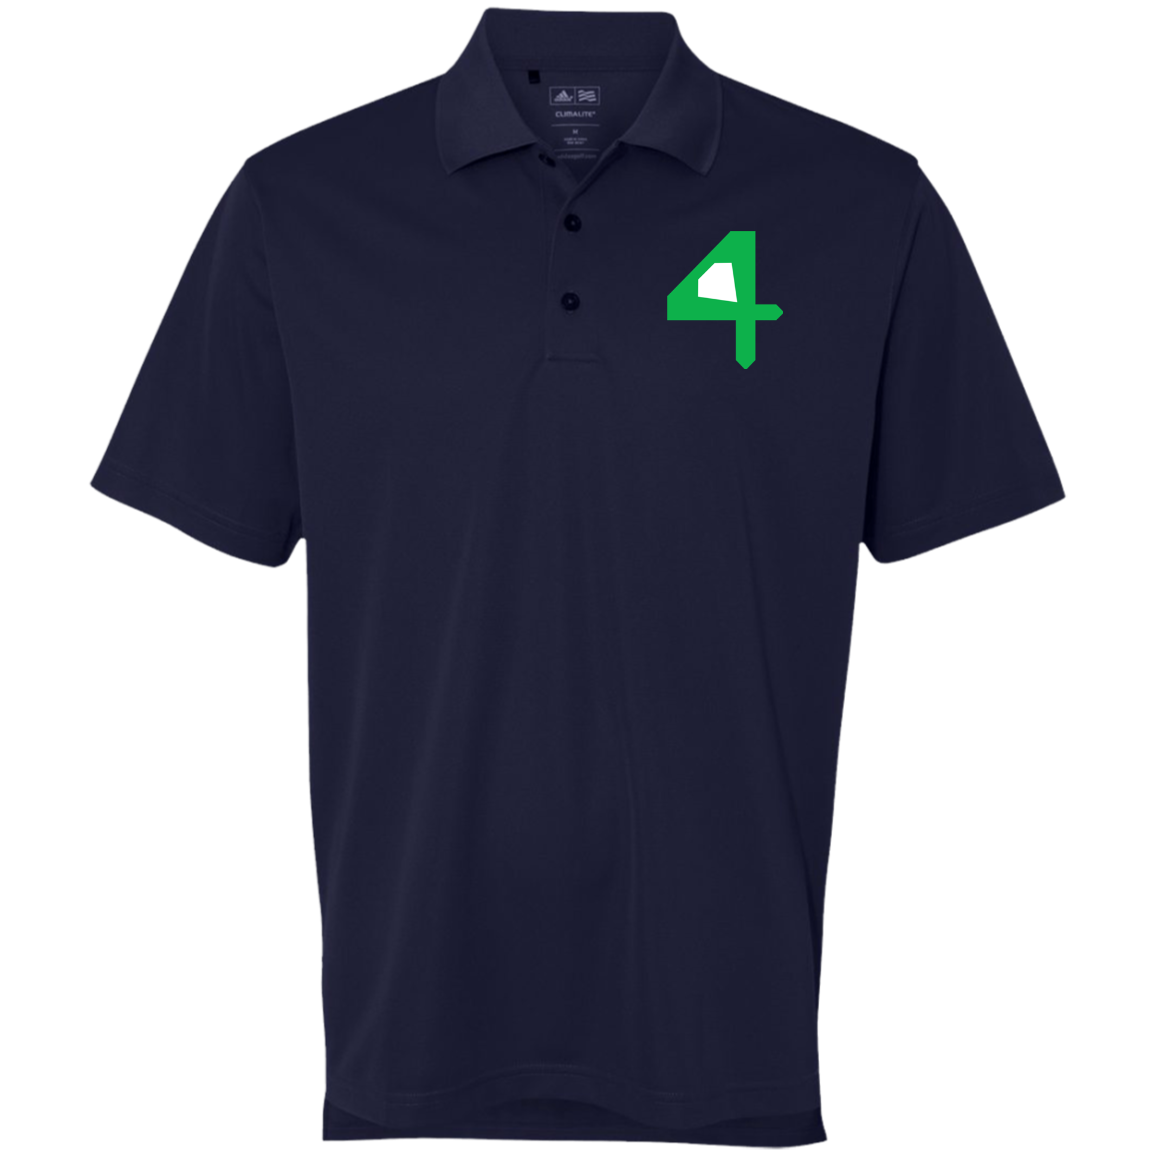 Adidas Green "4" Golf ClimaLite Polo